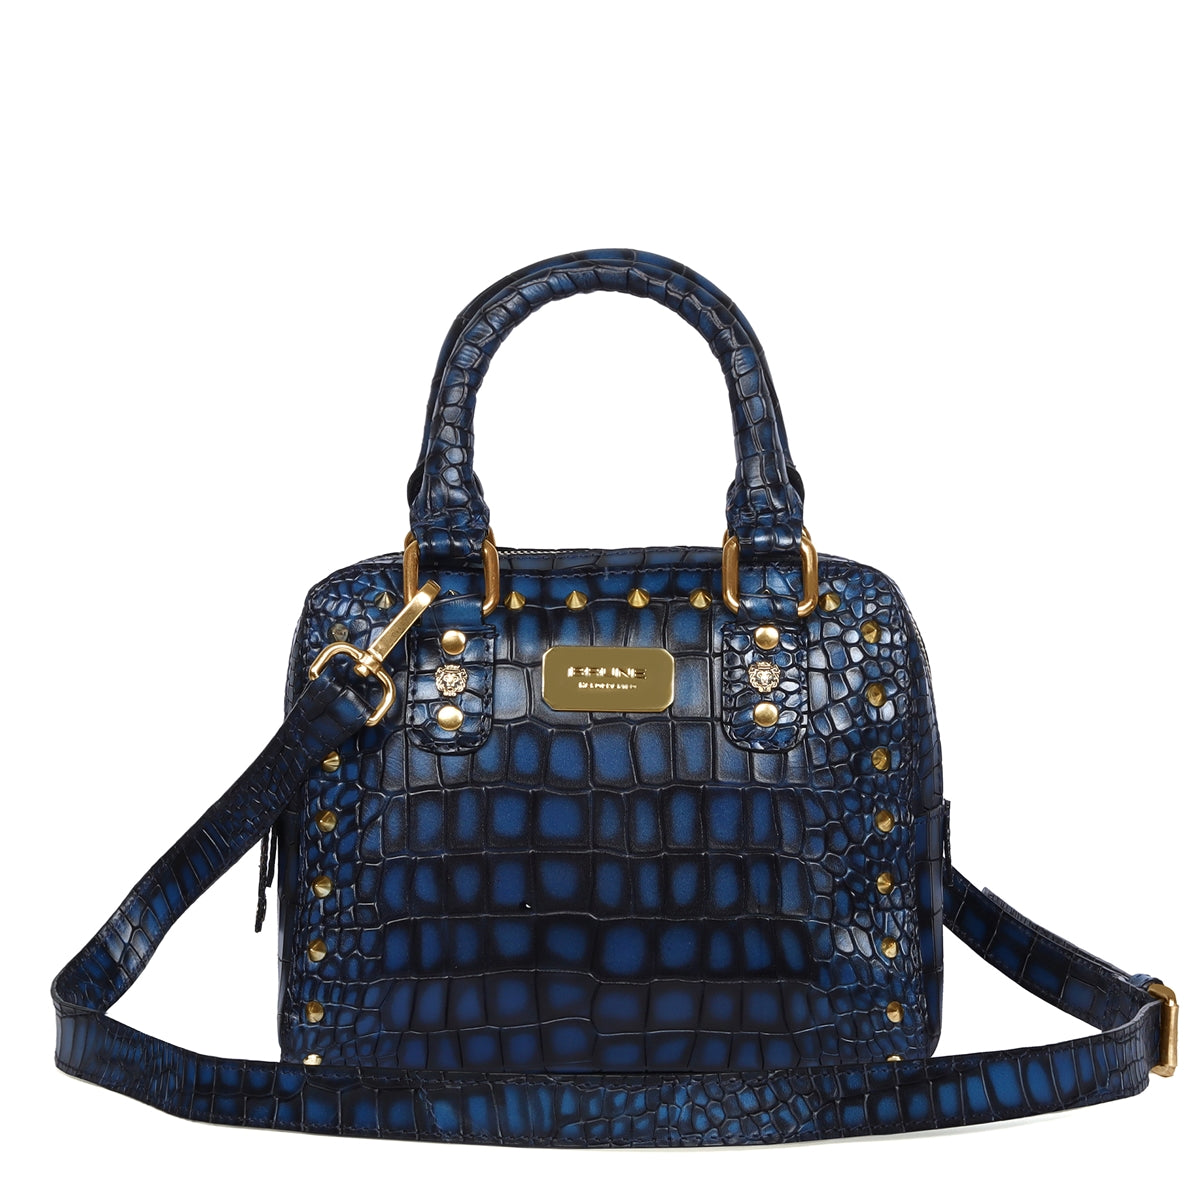 Golden Stud With Removable Shoulder Strap Blue Smokey Finish Croco Print Leather Ladies Handbag